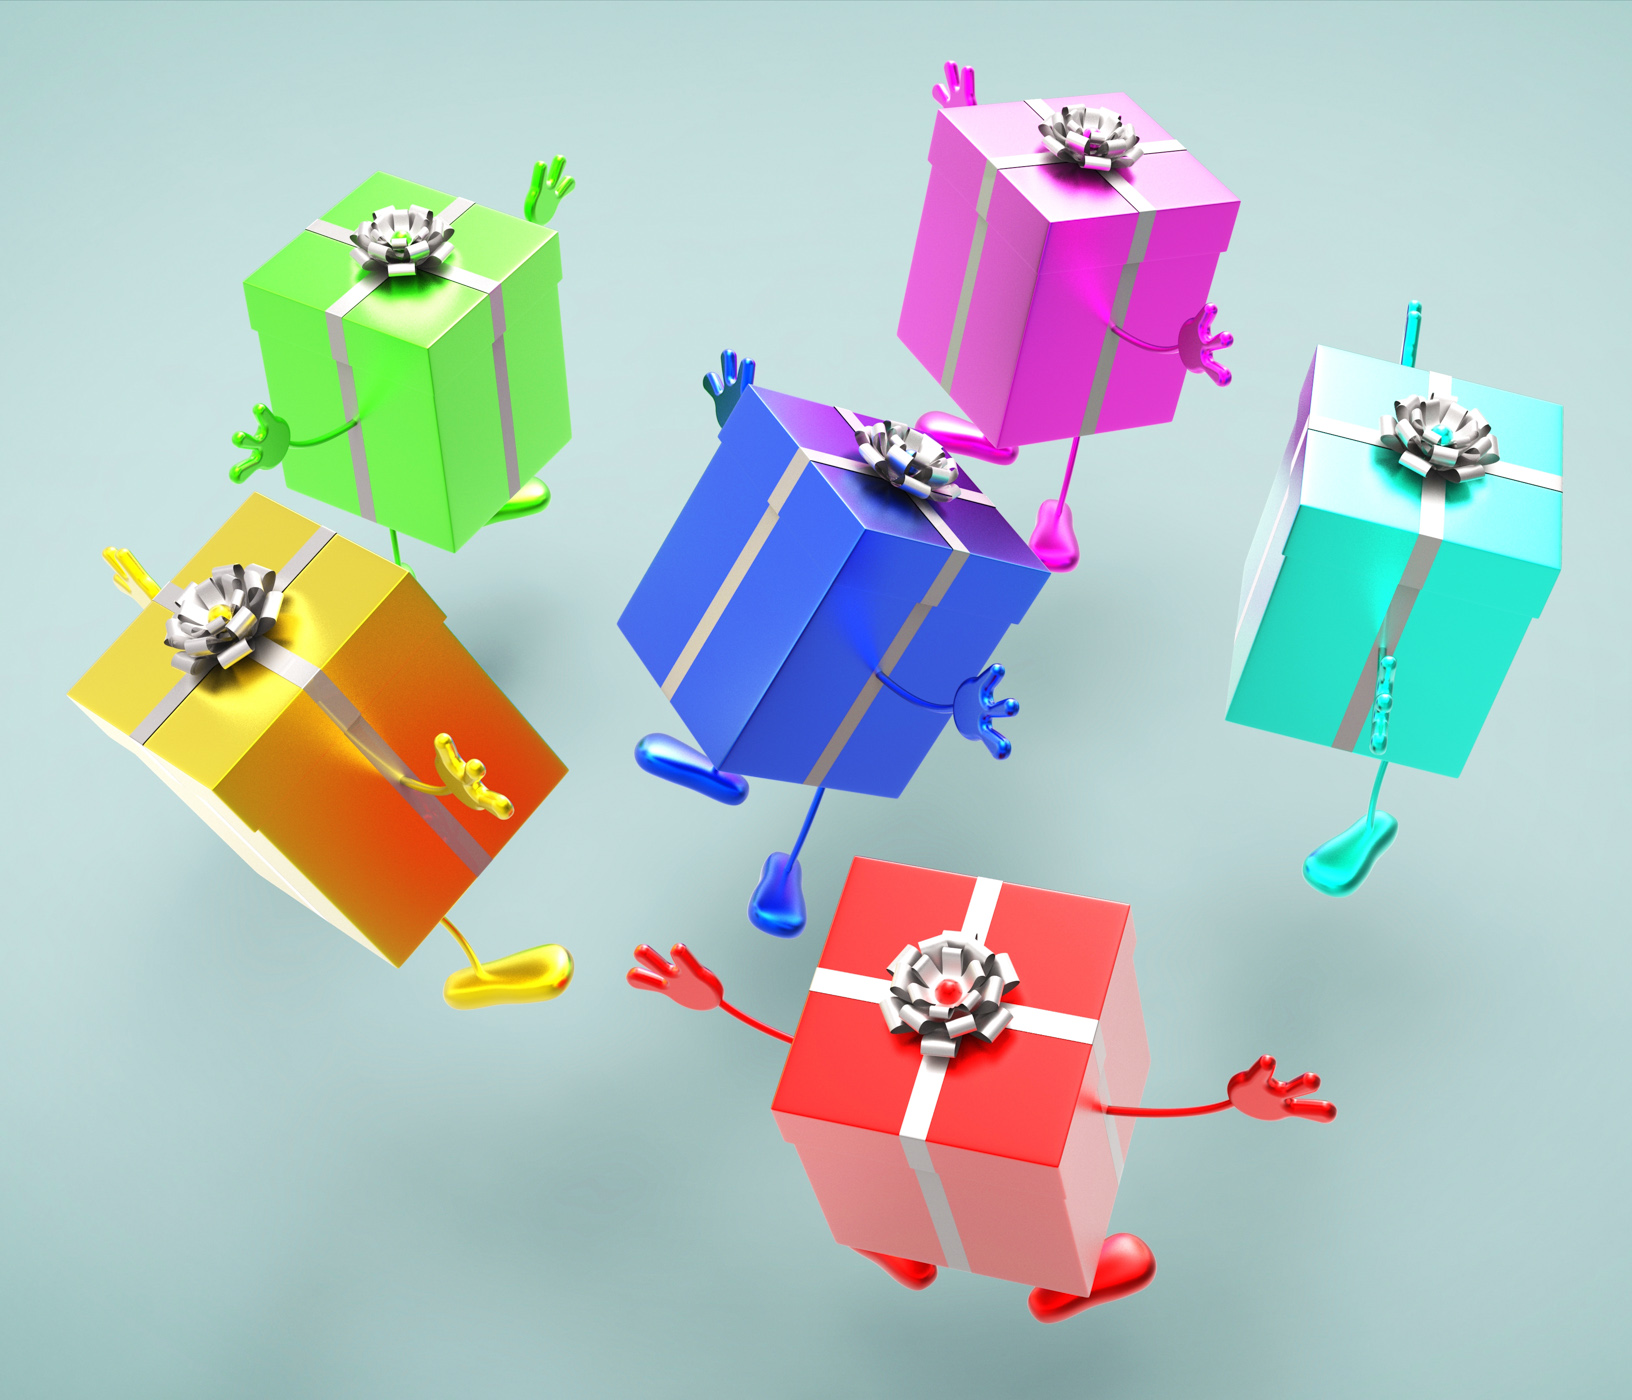 Celebration giftboxes represents celebrations giving and joy photo